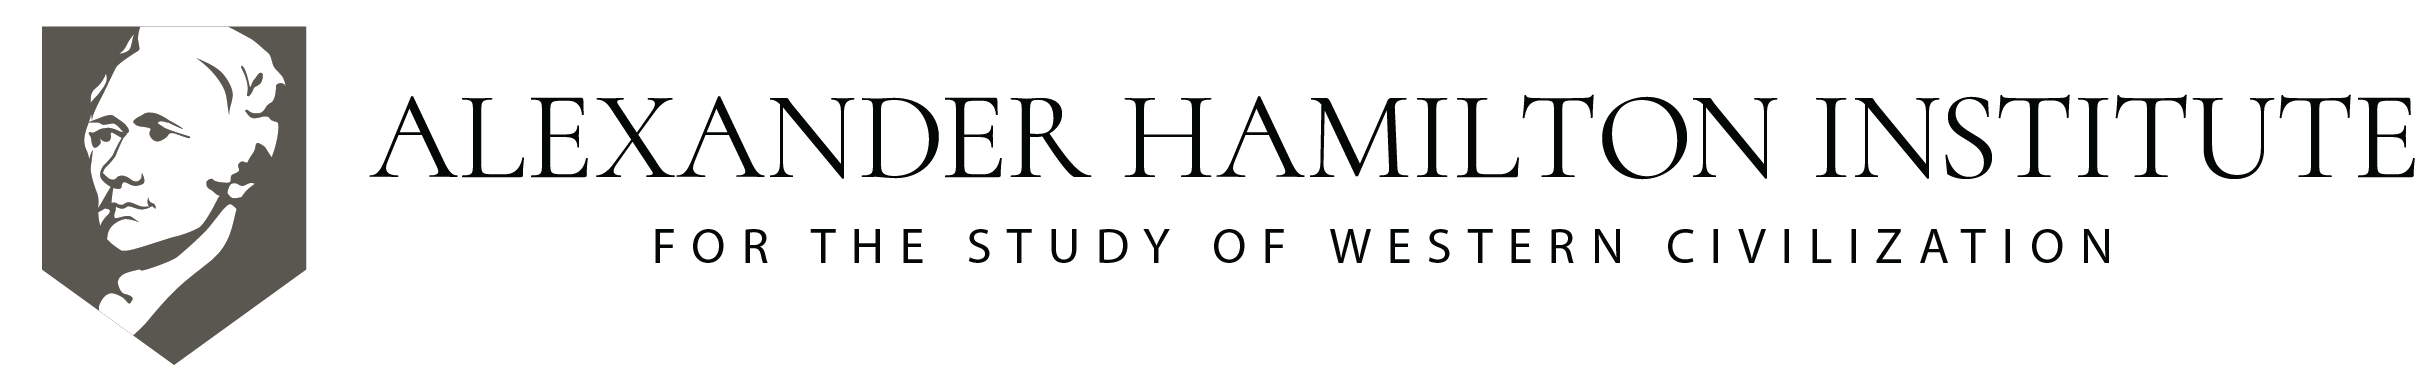 Alexander Hamilton Institute for the Study of Western Civilization Logo